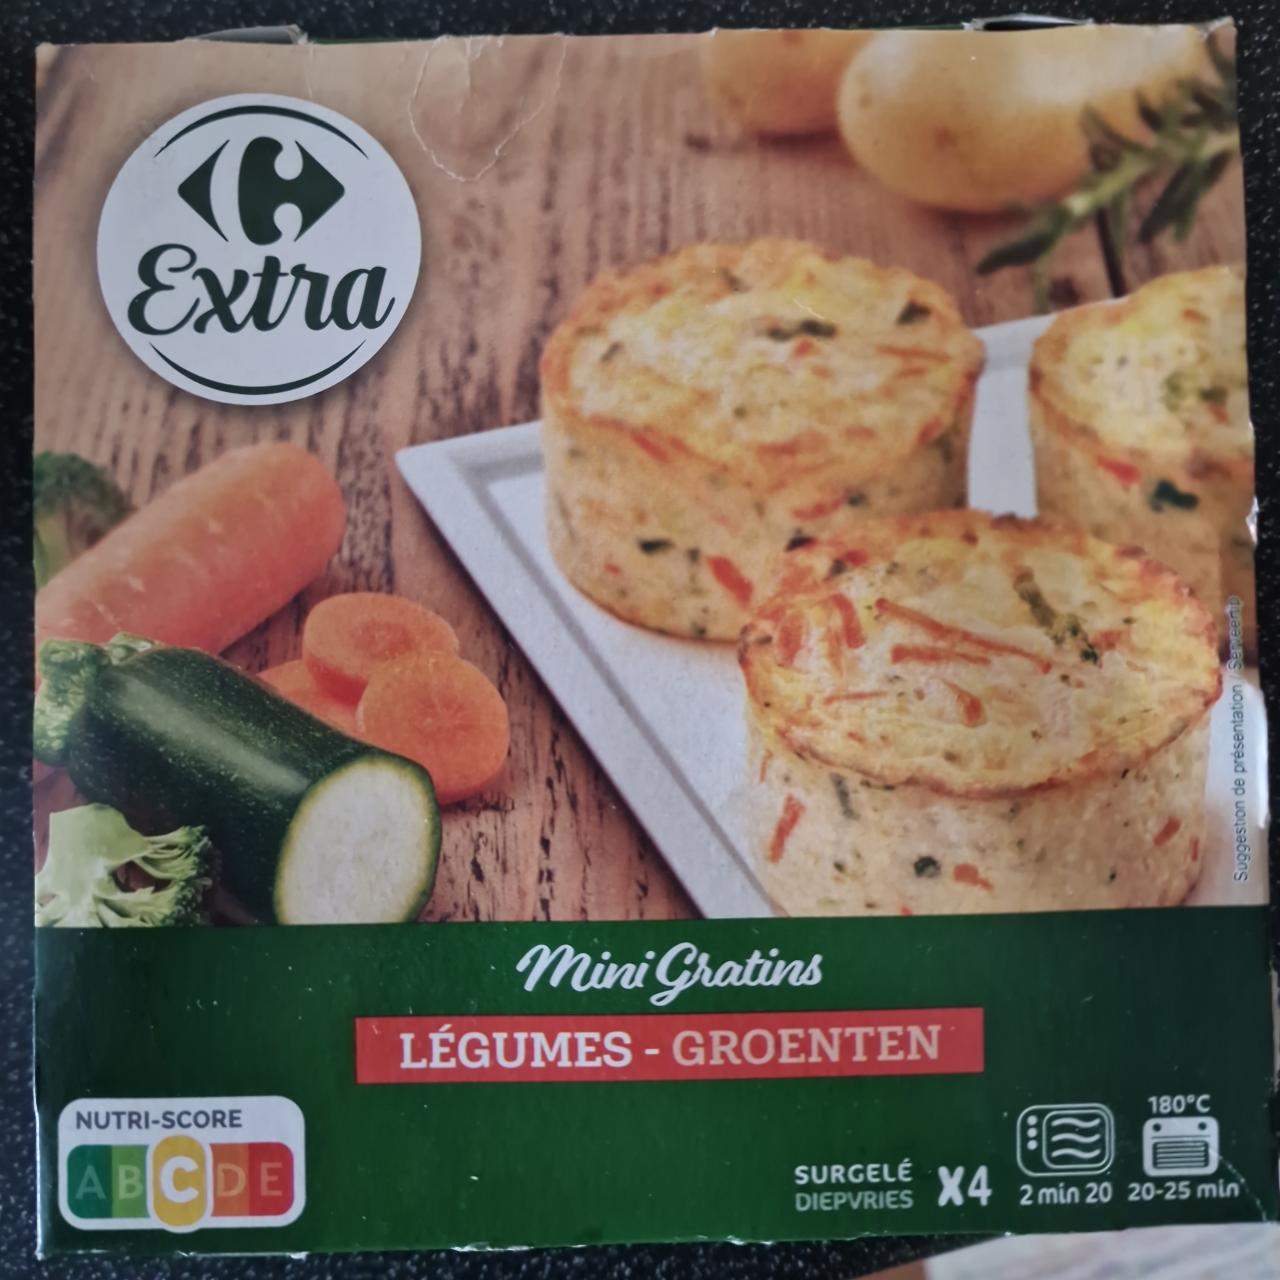 Fotografie - Mini gratins légumes groenten Carrefour Extra